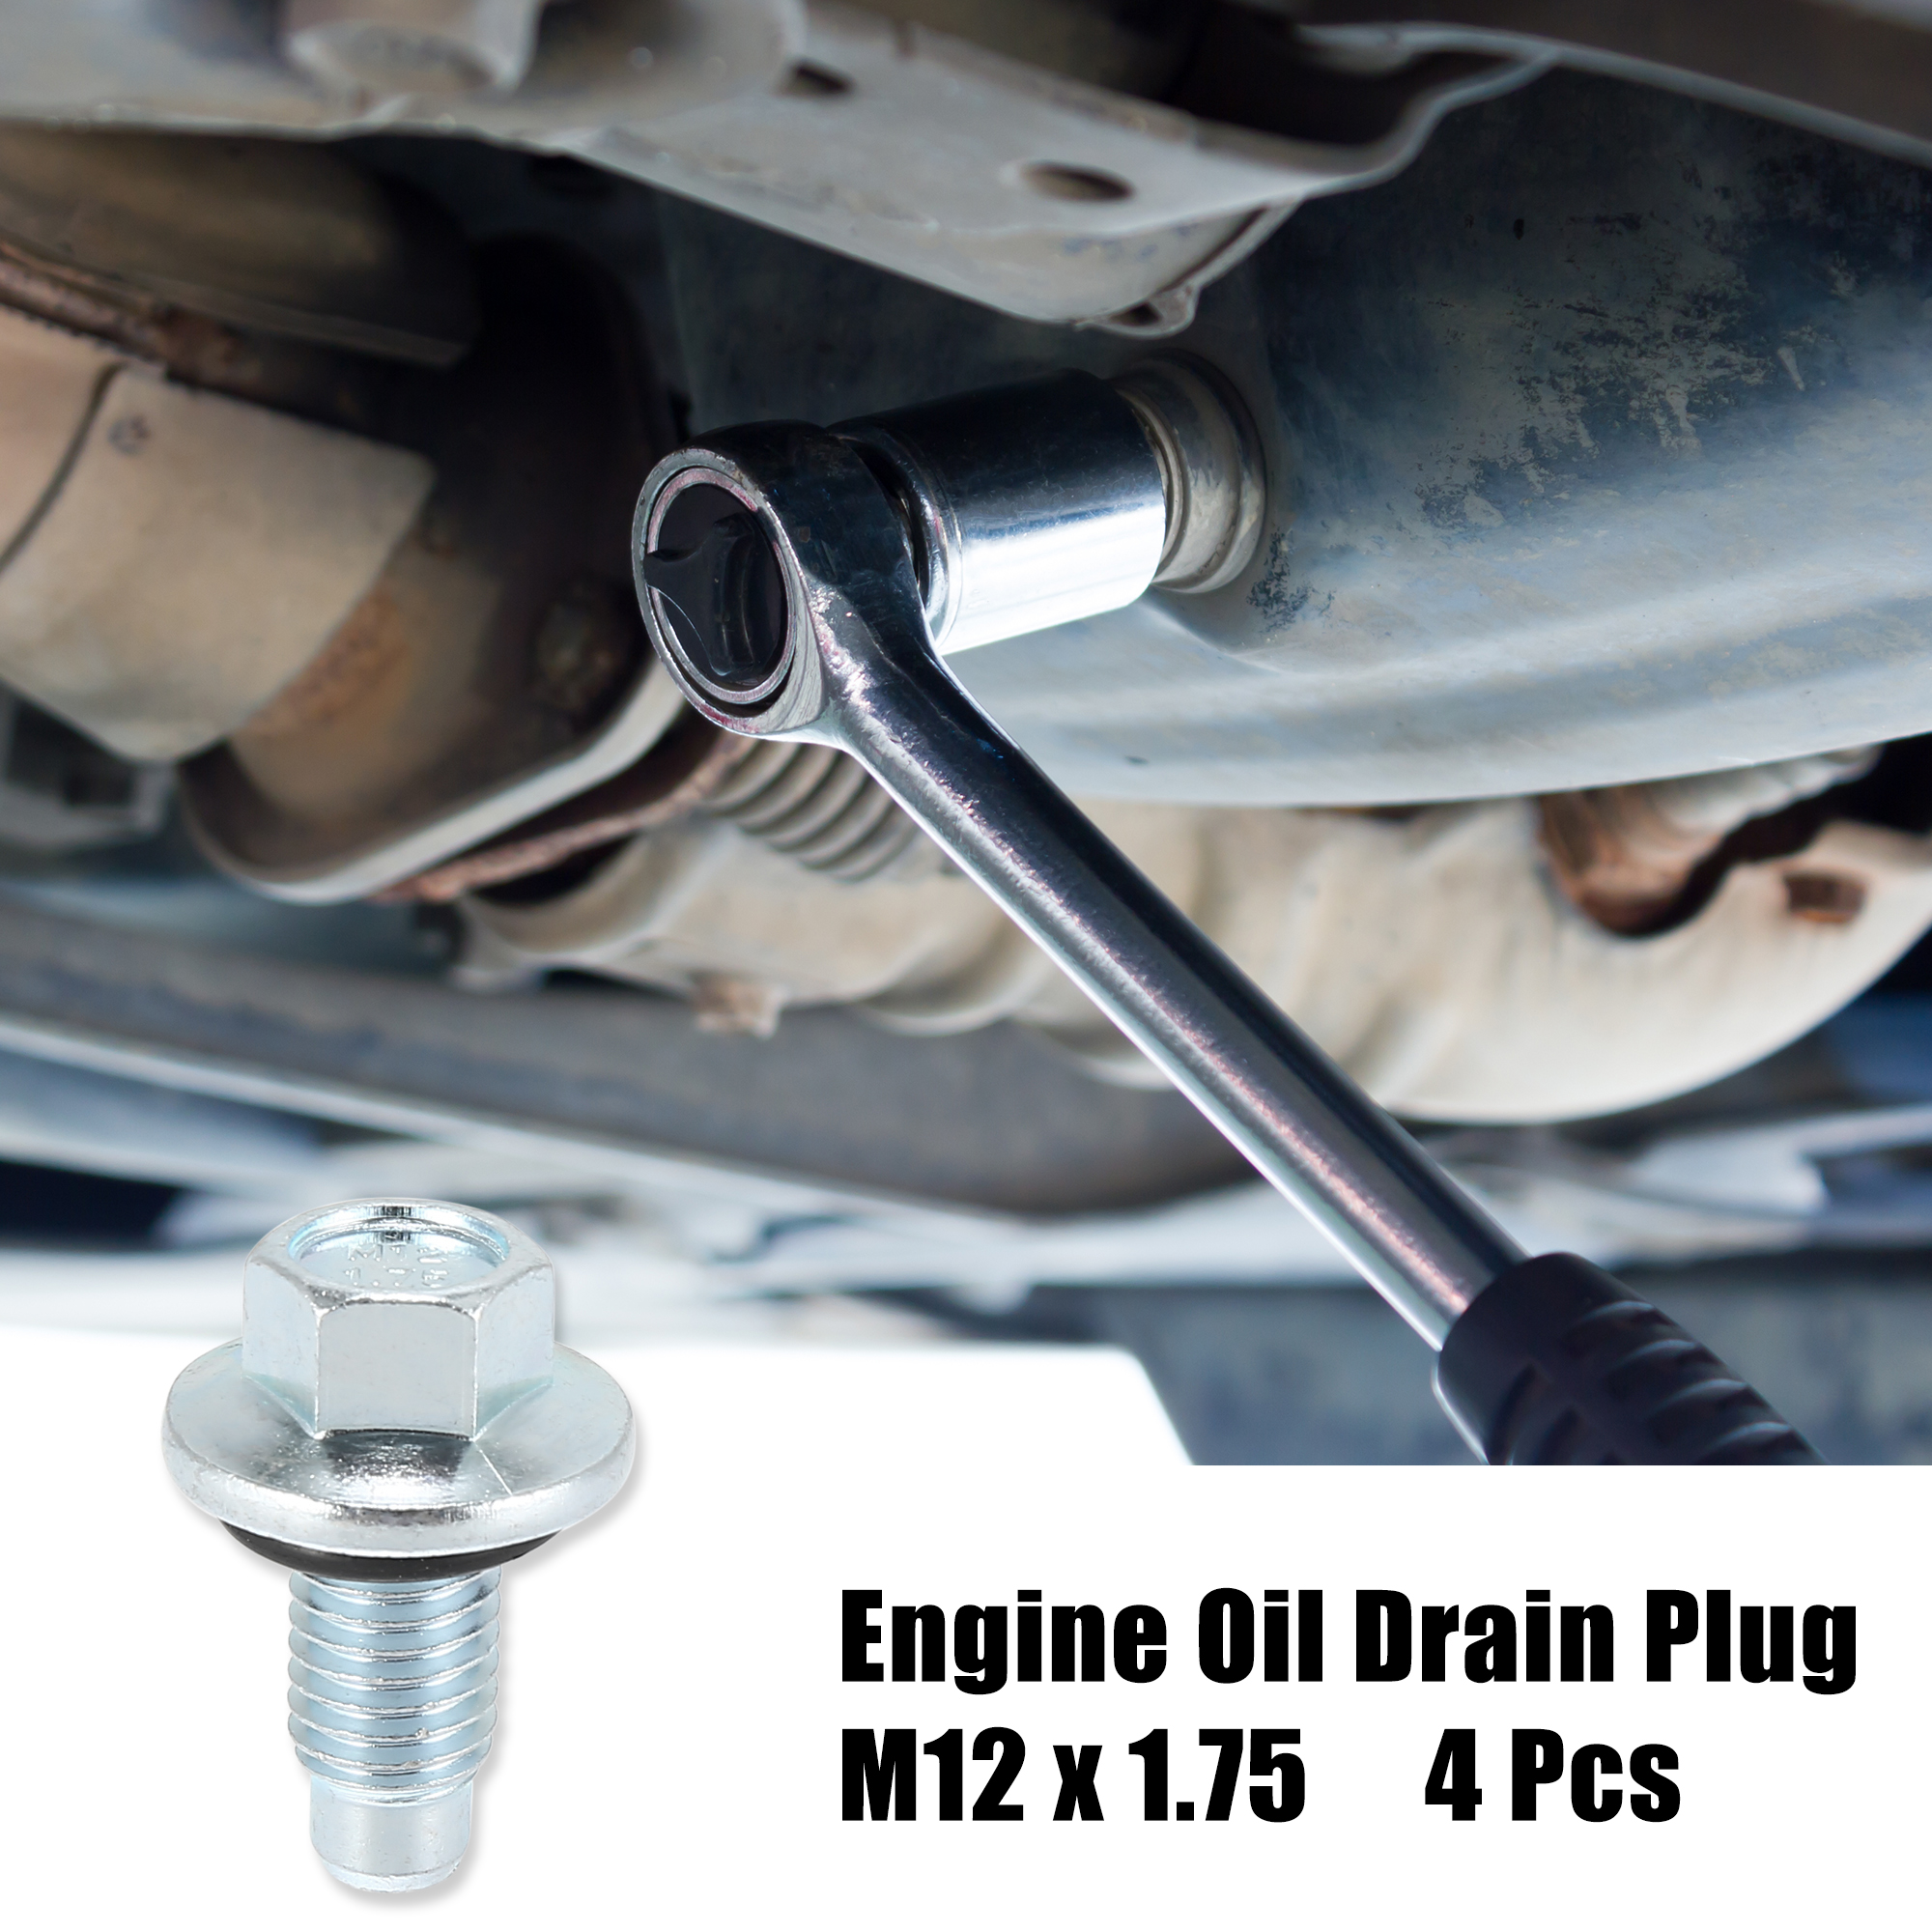 Unique Bargains 4 Pcs M12 x 1.75 Stainless Steel Engine Oil Drain Plug for Buick Silver Tone